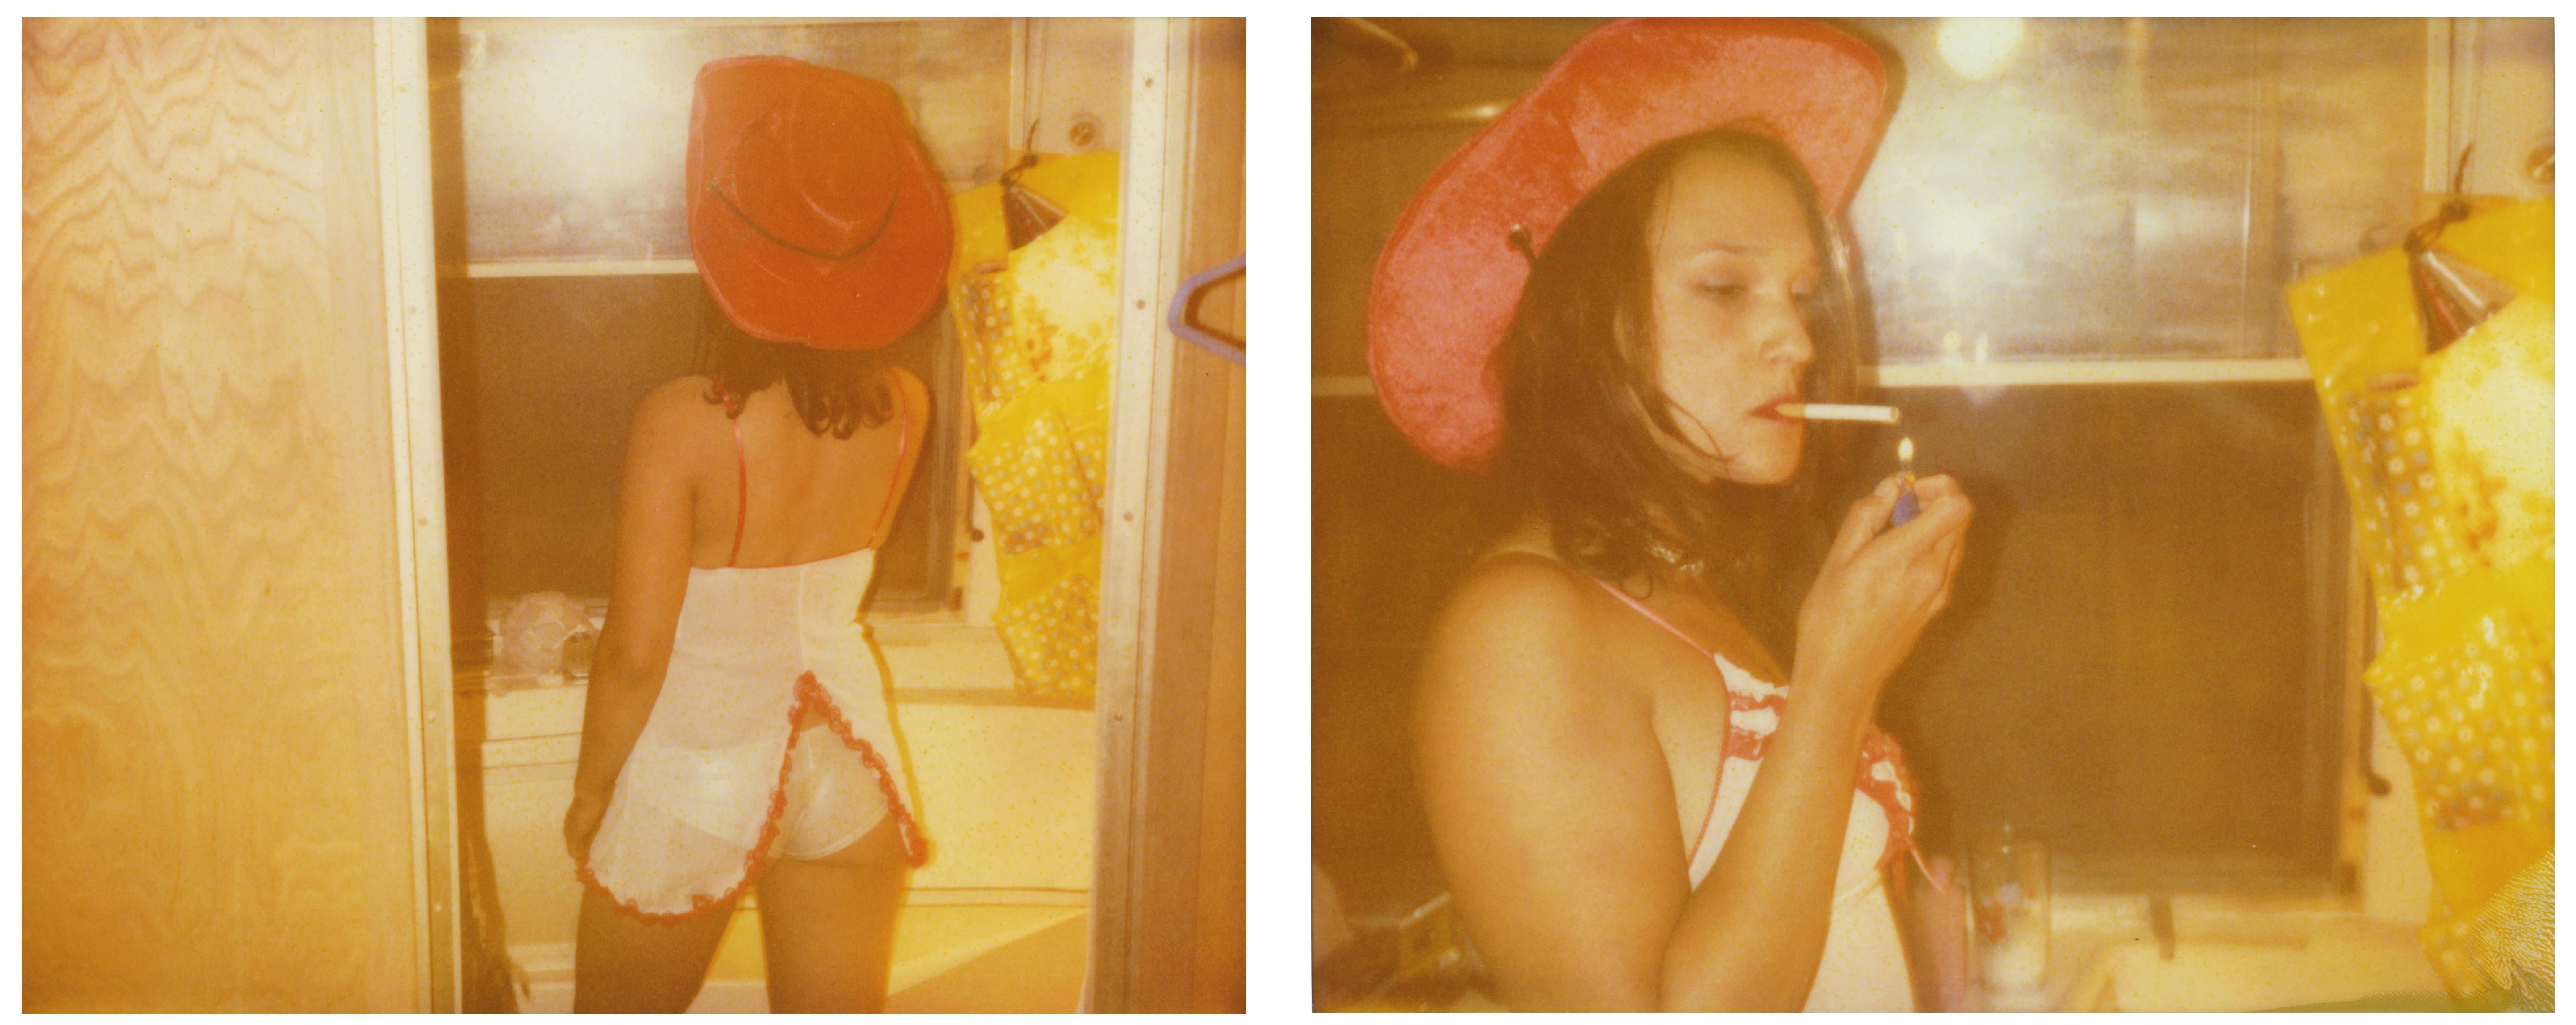 Stefanie Schneider Nude Photograph - 'Margarita smokes' from Till Death do us Part, diptych